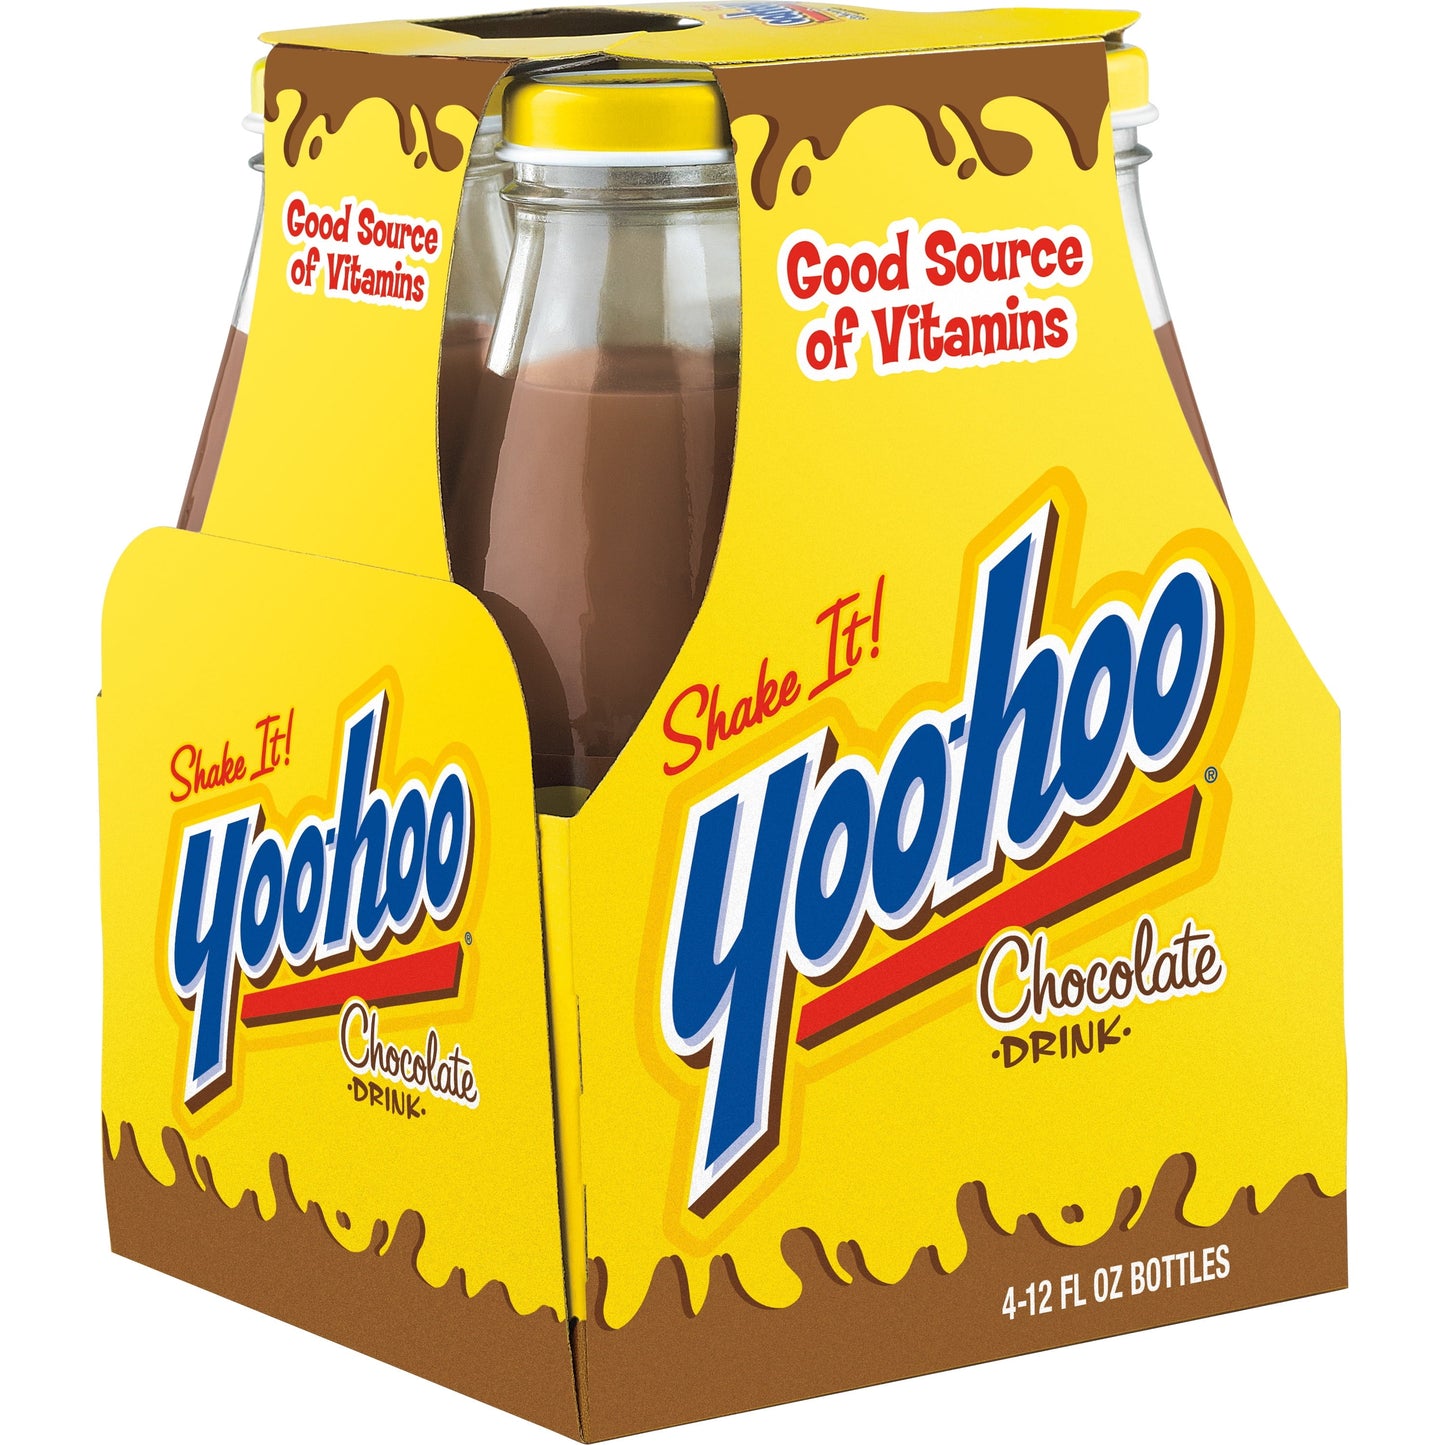 Yoo-hoo Chocolate Drink, 12 fl oz glass bottles, 4 pack